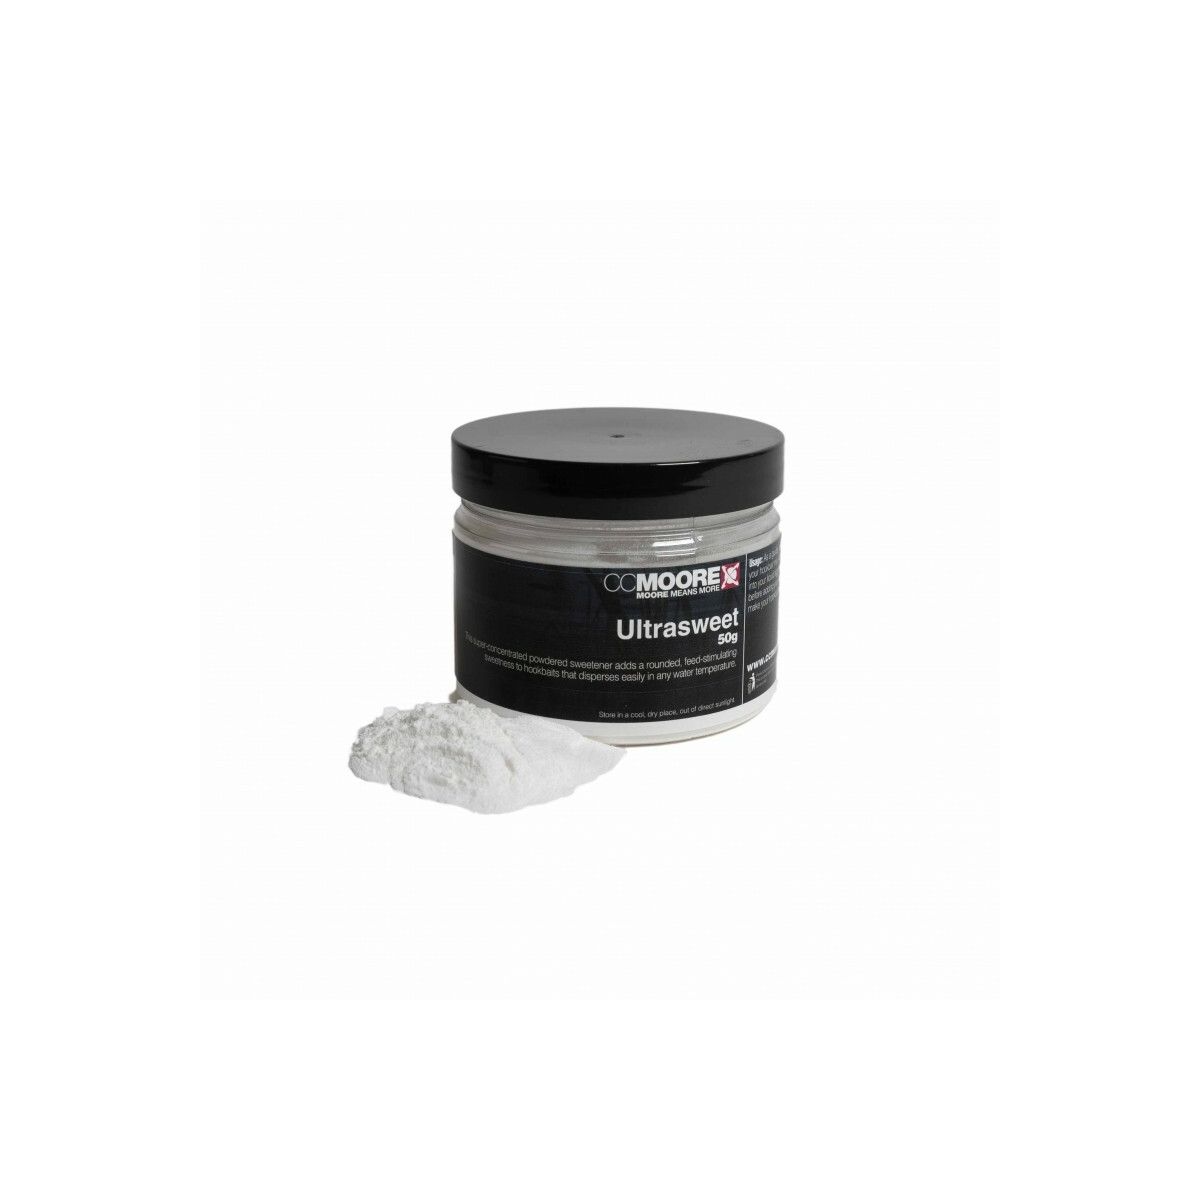 CC Moore Ultrasweet Powder - 50g / 250g